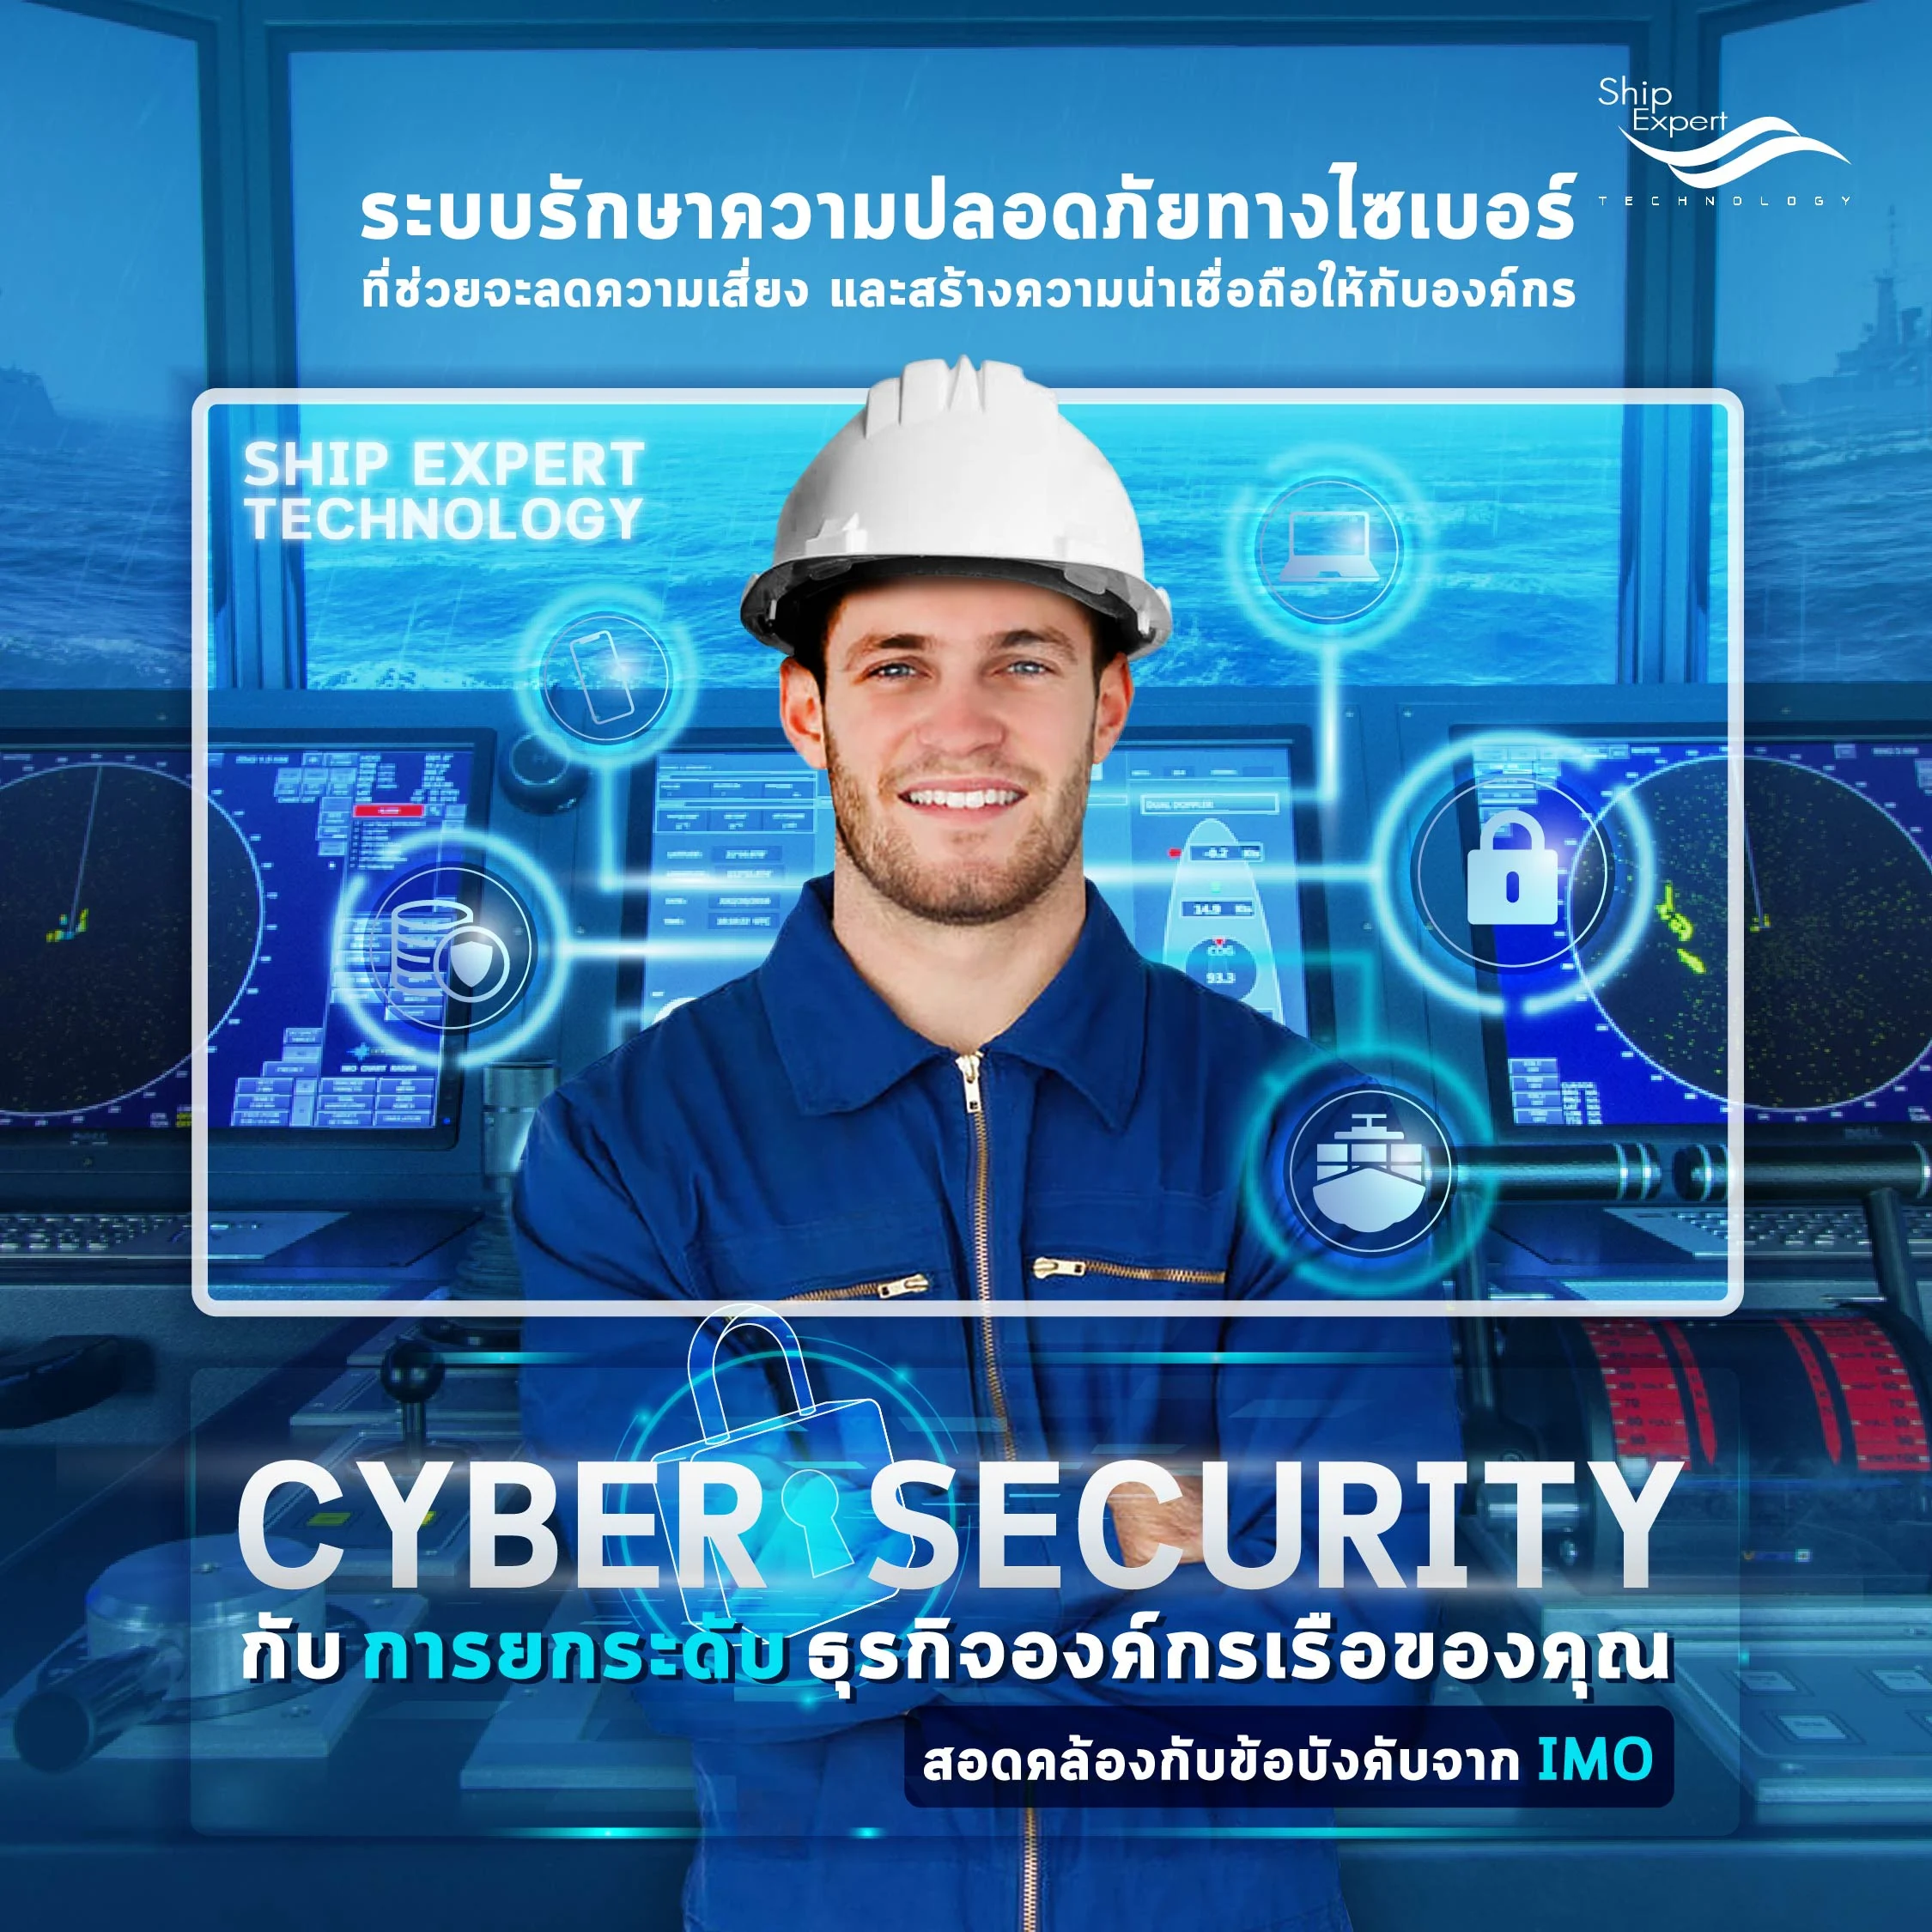 Cyber Security กับการยกระดับธุรกิจองค์กรเรือของคุณ